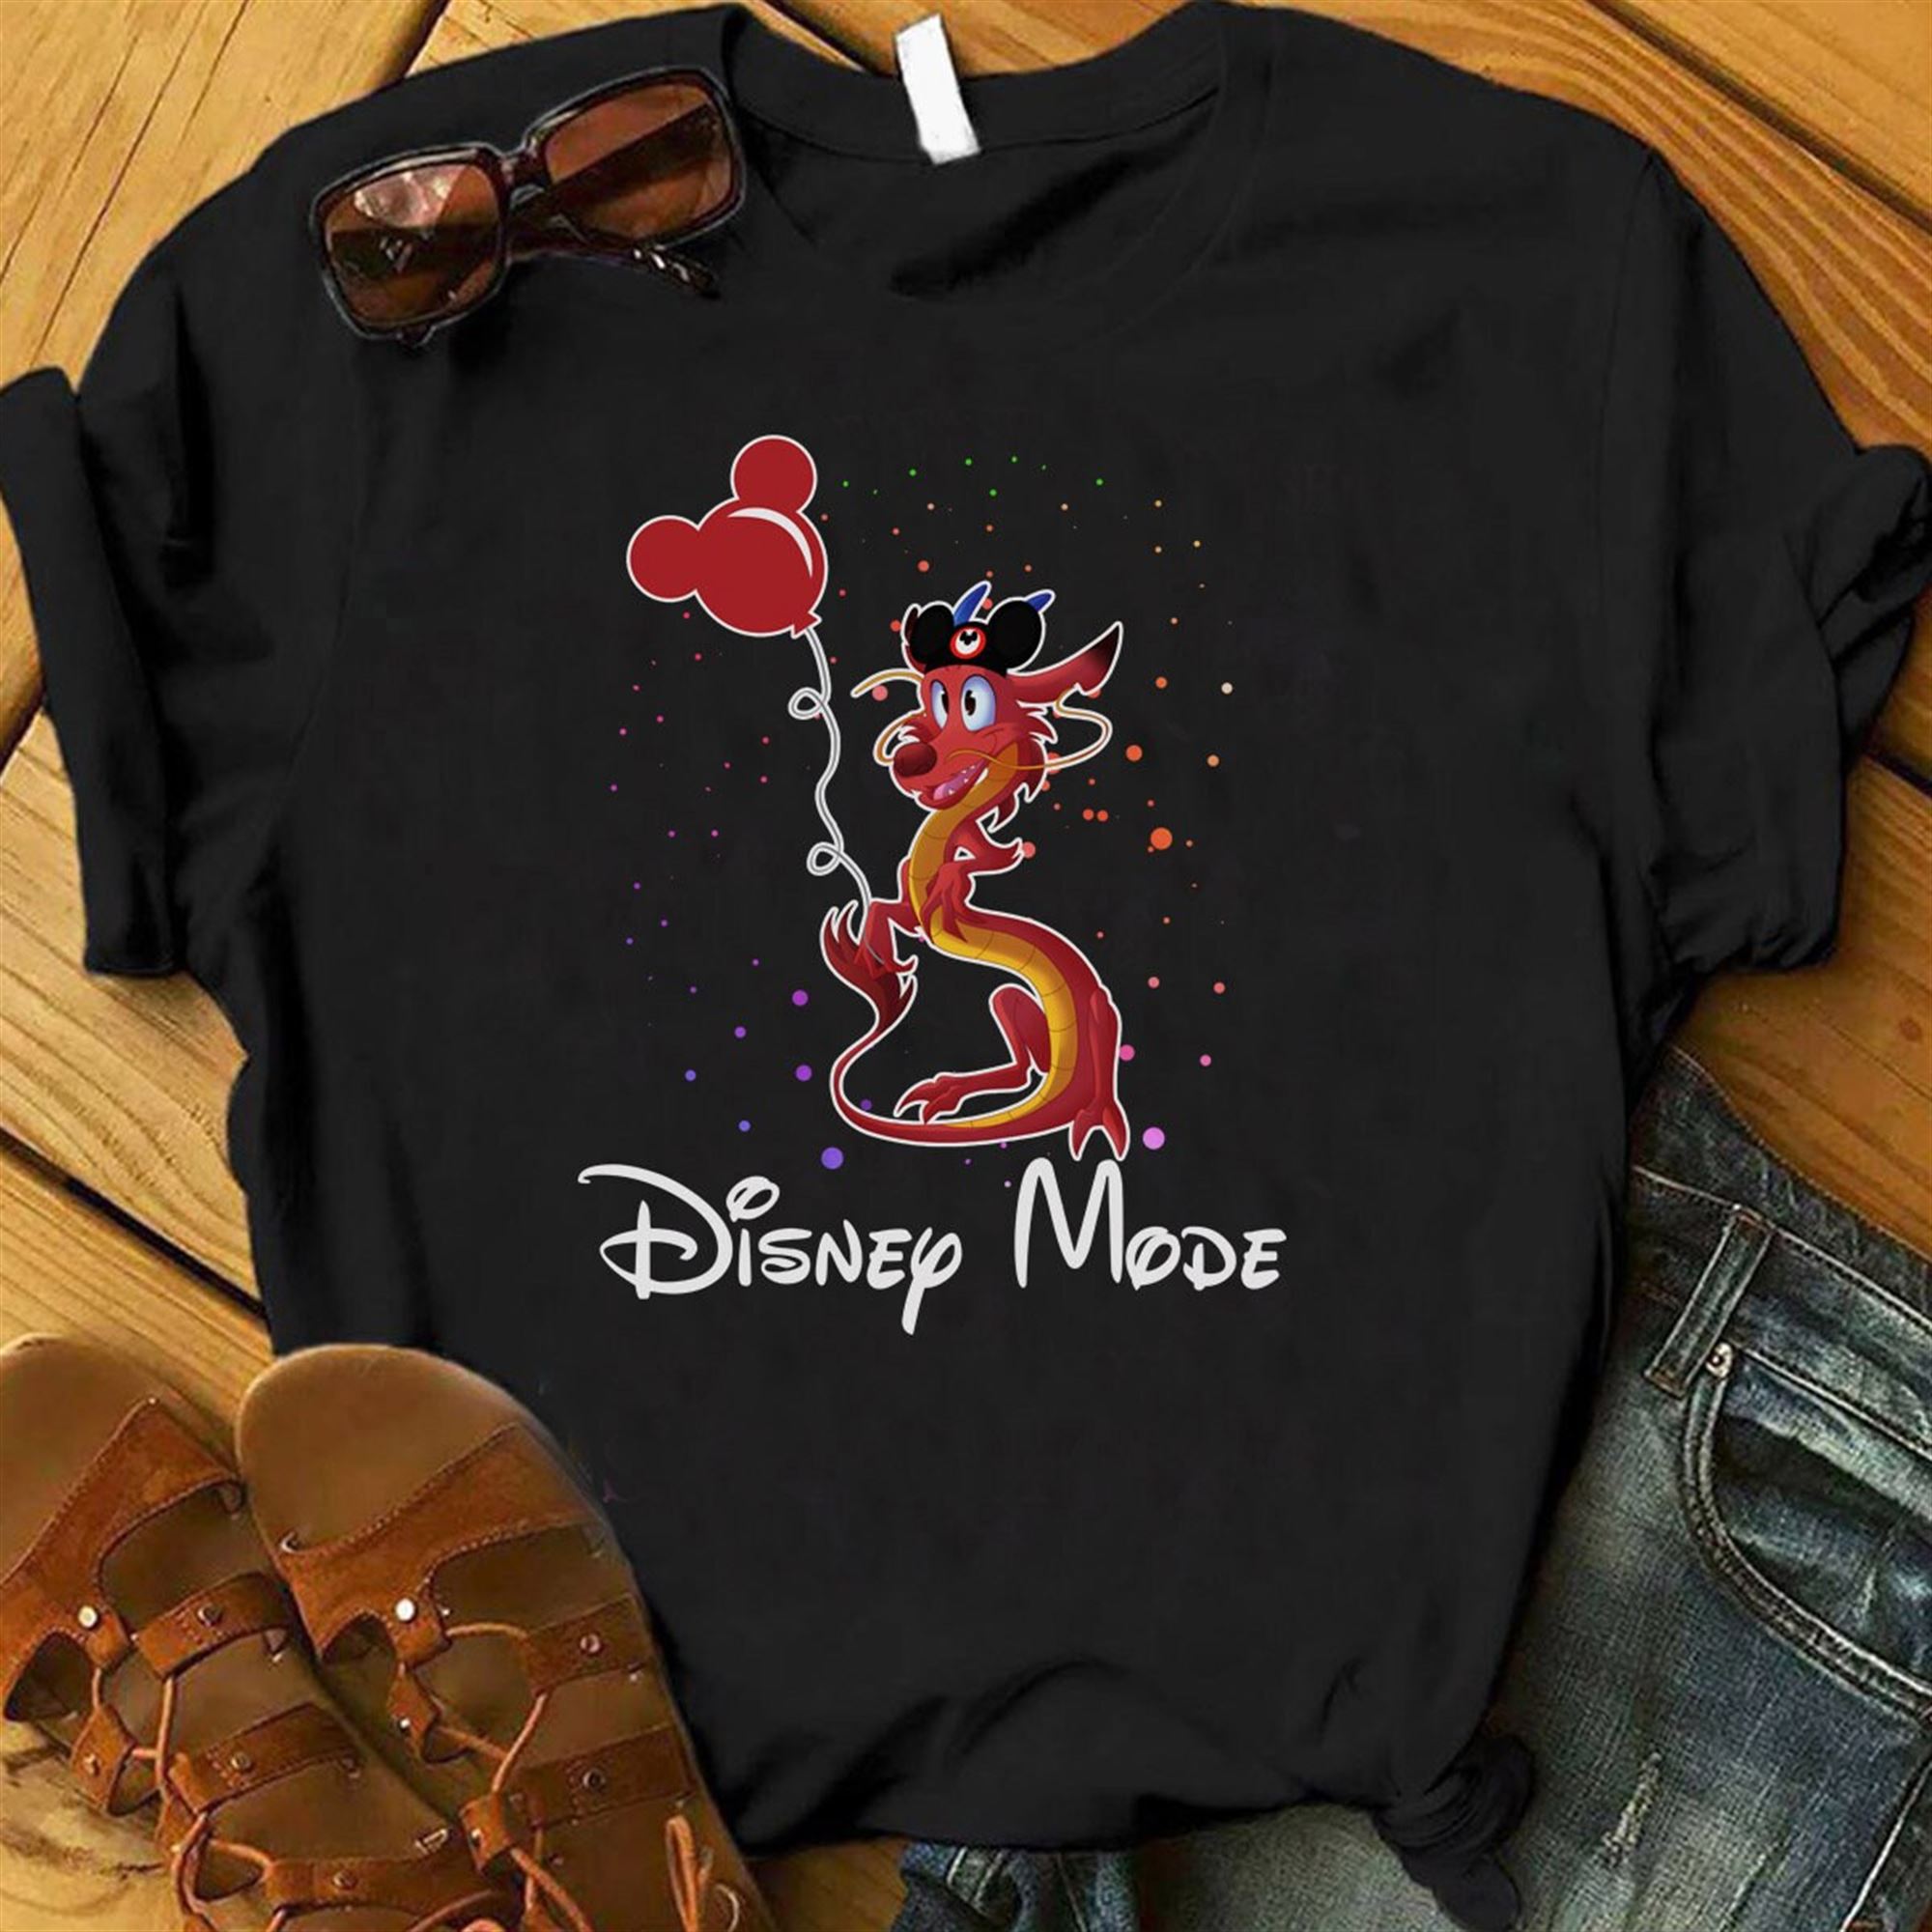 Mushu Disney Mode Shirts Mulan Inspired Shirt Funny Mushu Matching Family Shirts Disney World Vacation Shirts Mommy And Me